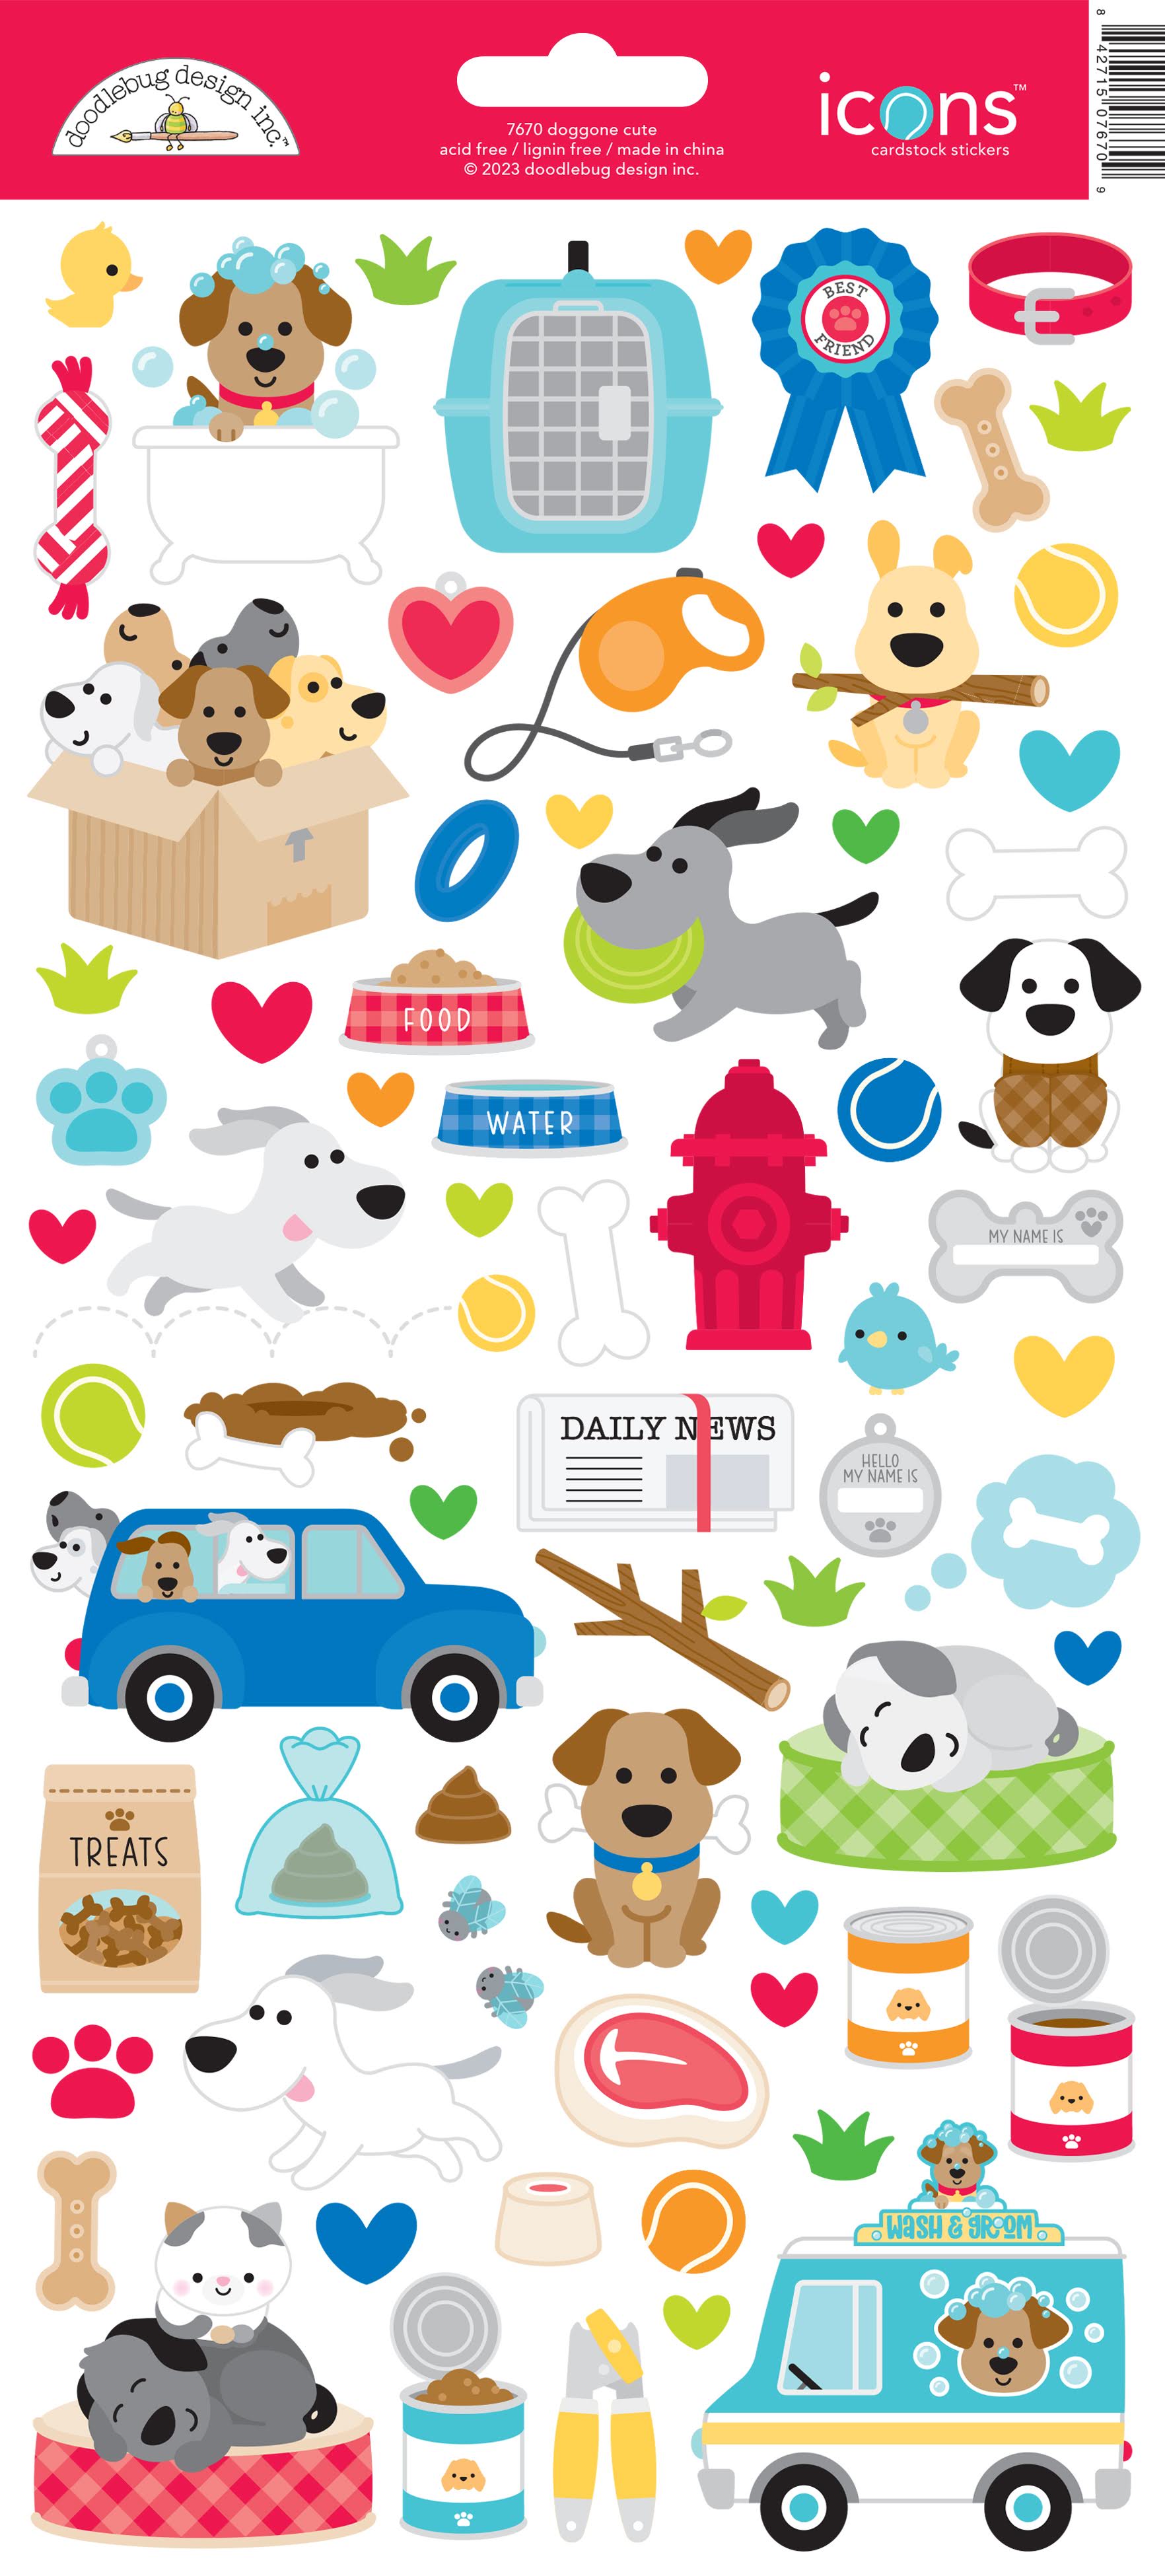 Group of friends Stickers, Unique Designs